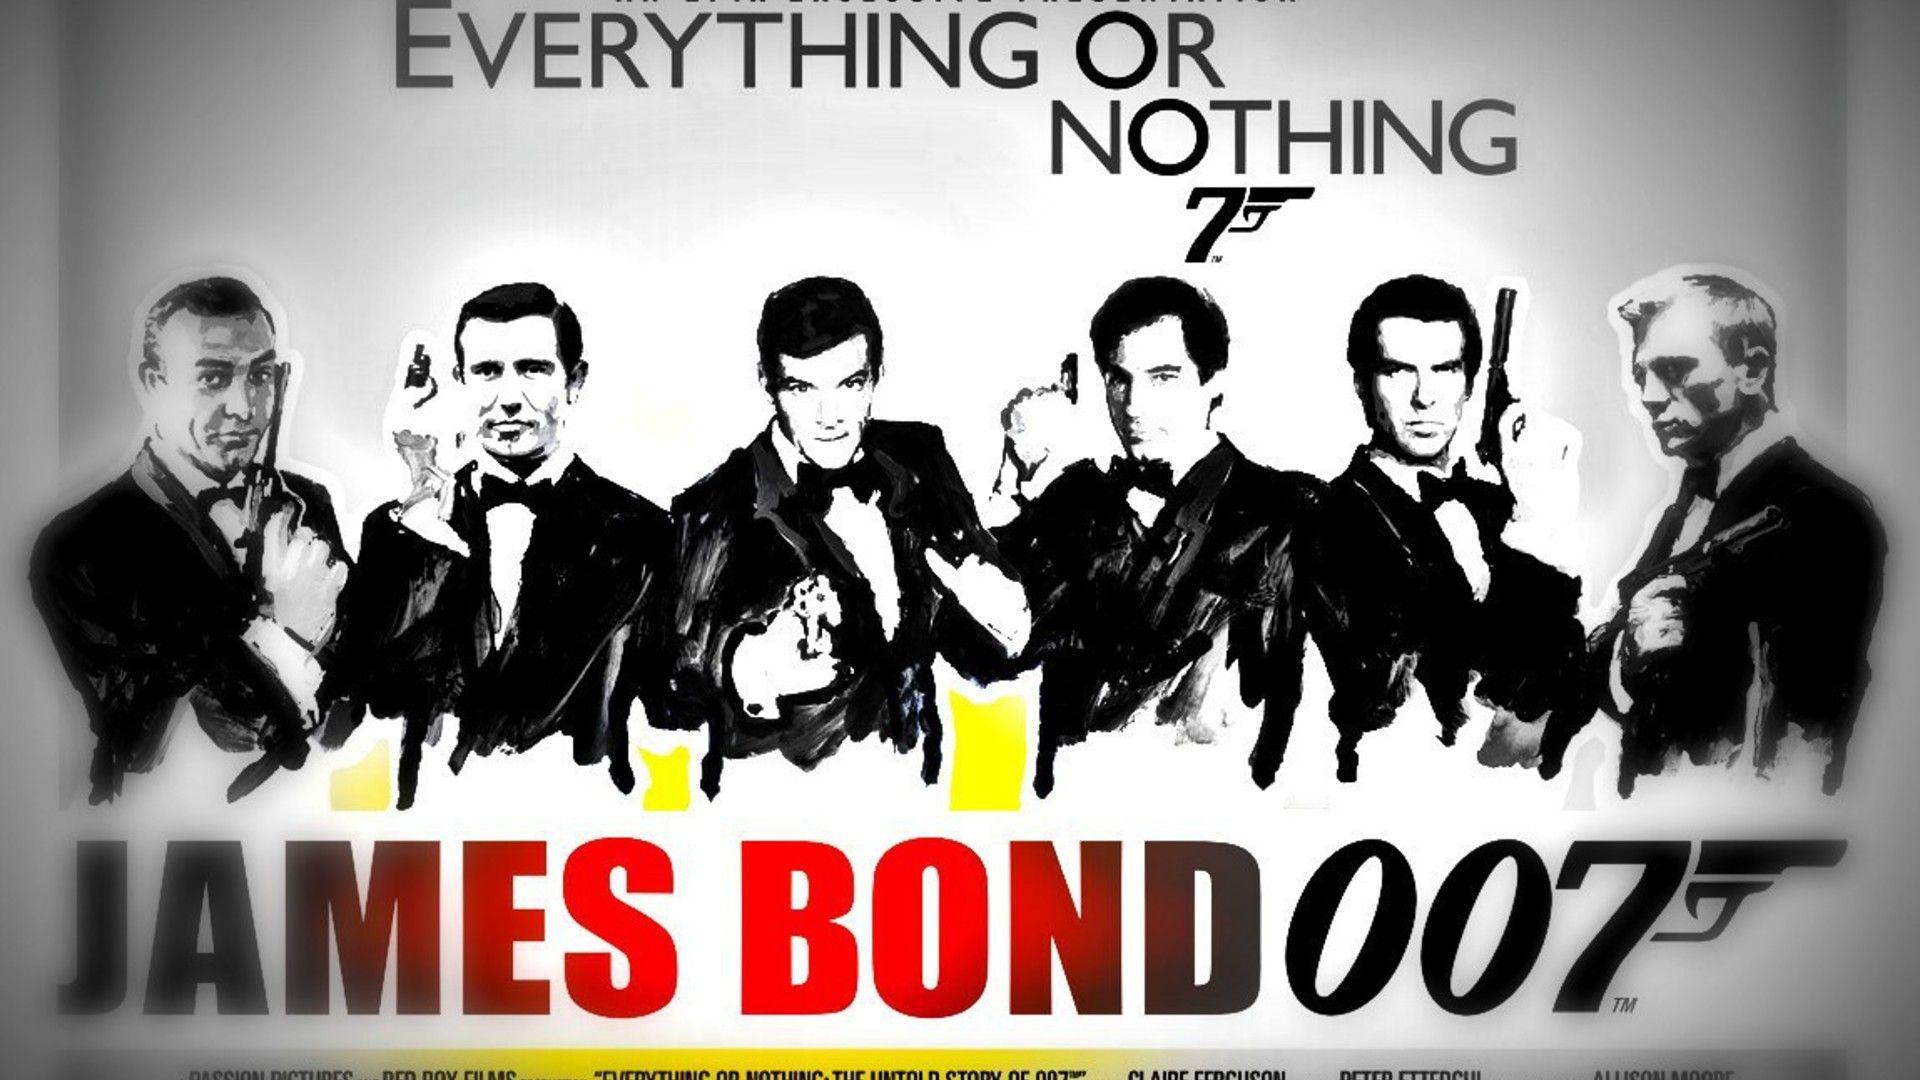 James bond wallpaper. PC